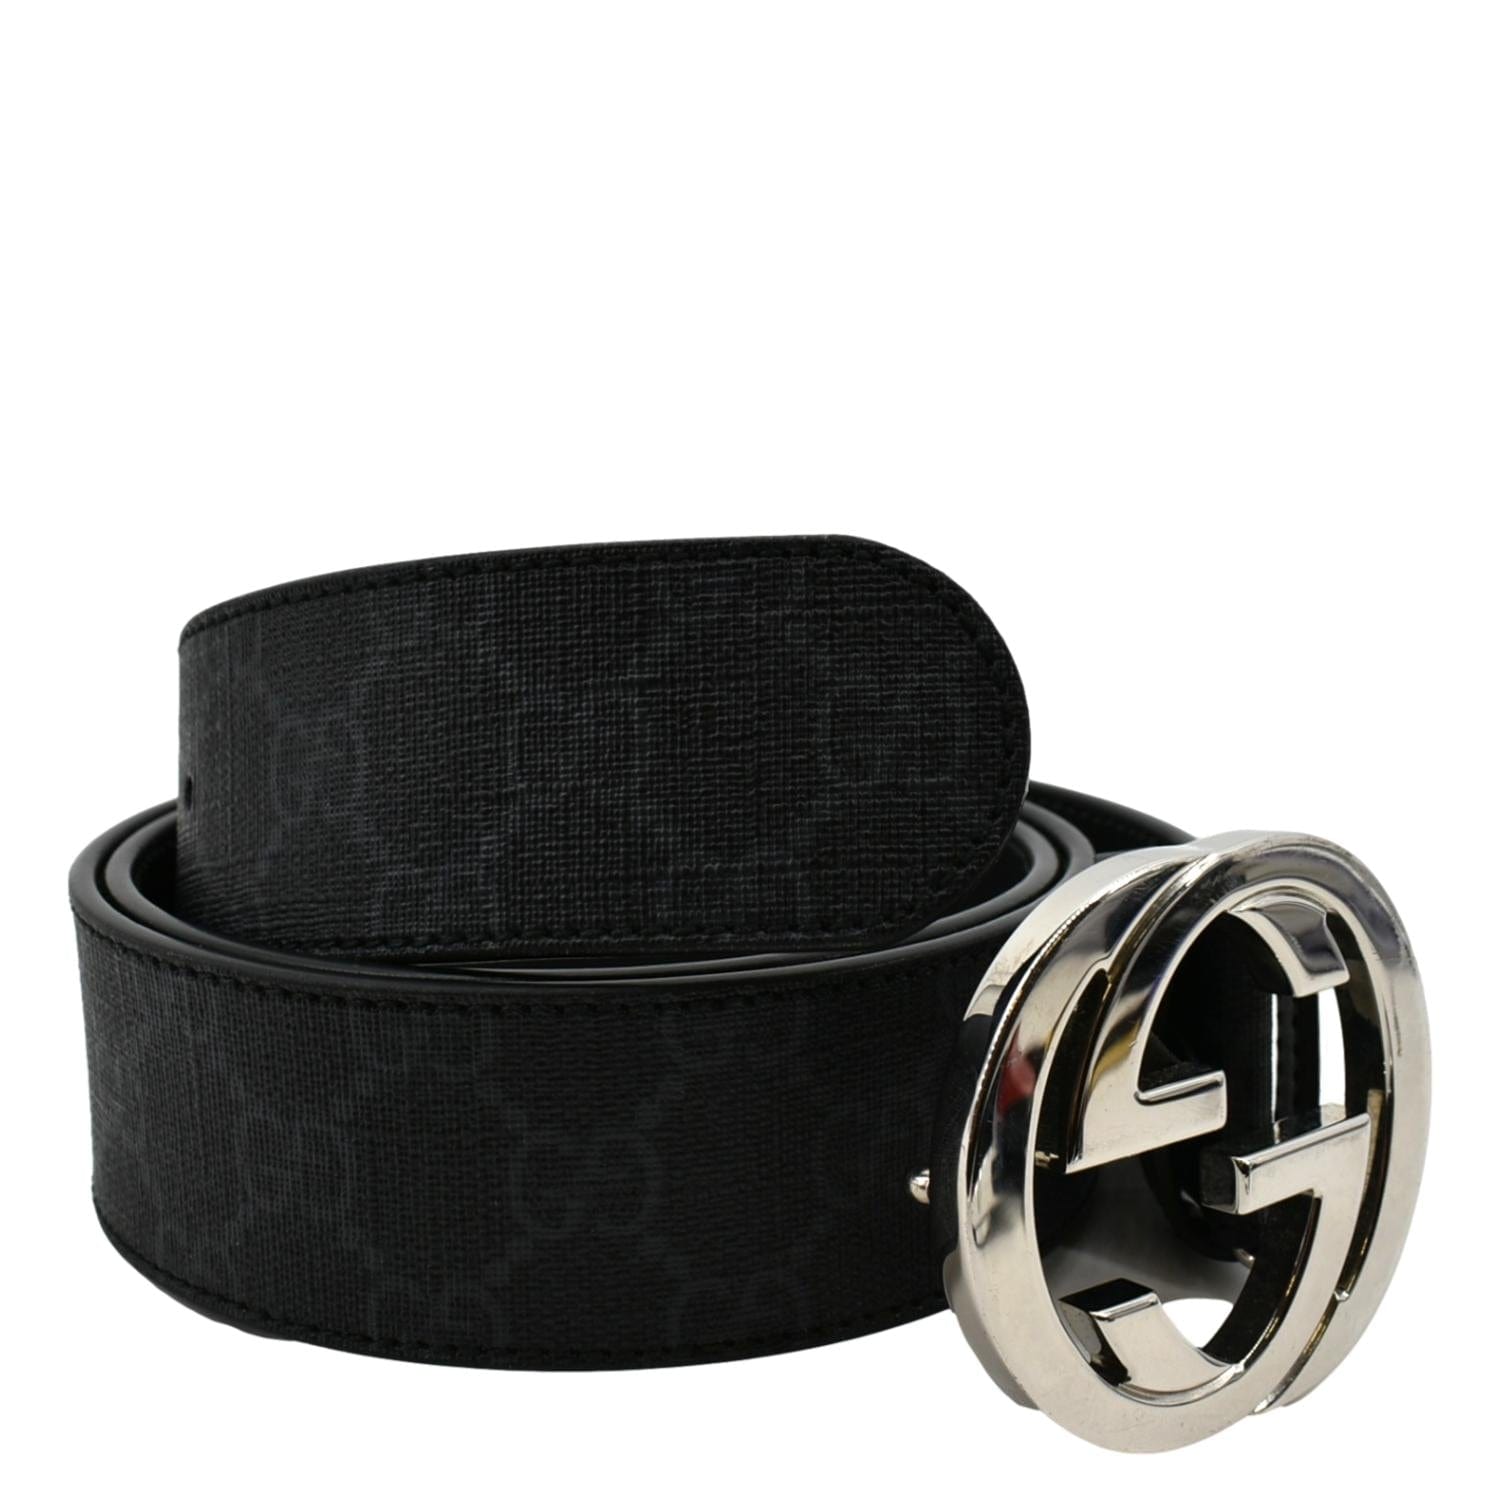 Gucci Men's Leather Belt with Interlocking G Buckle - Black - Belts